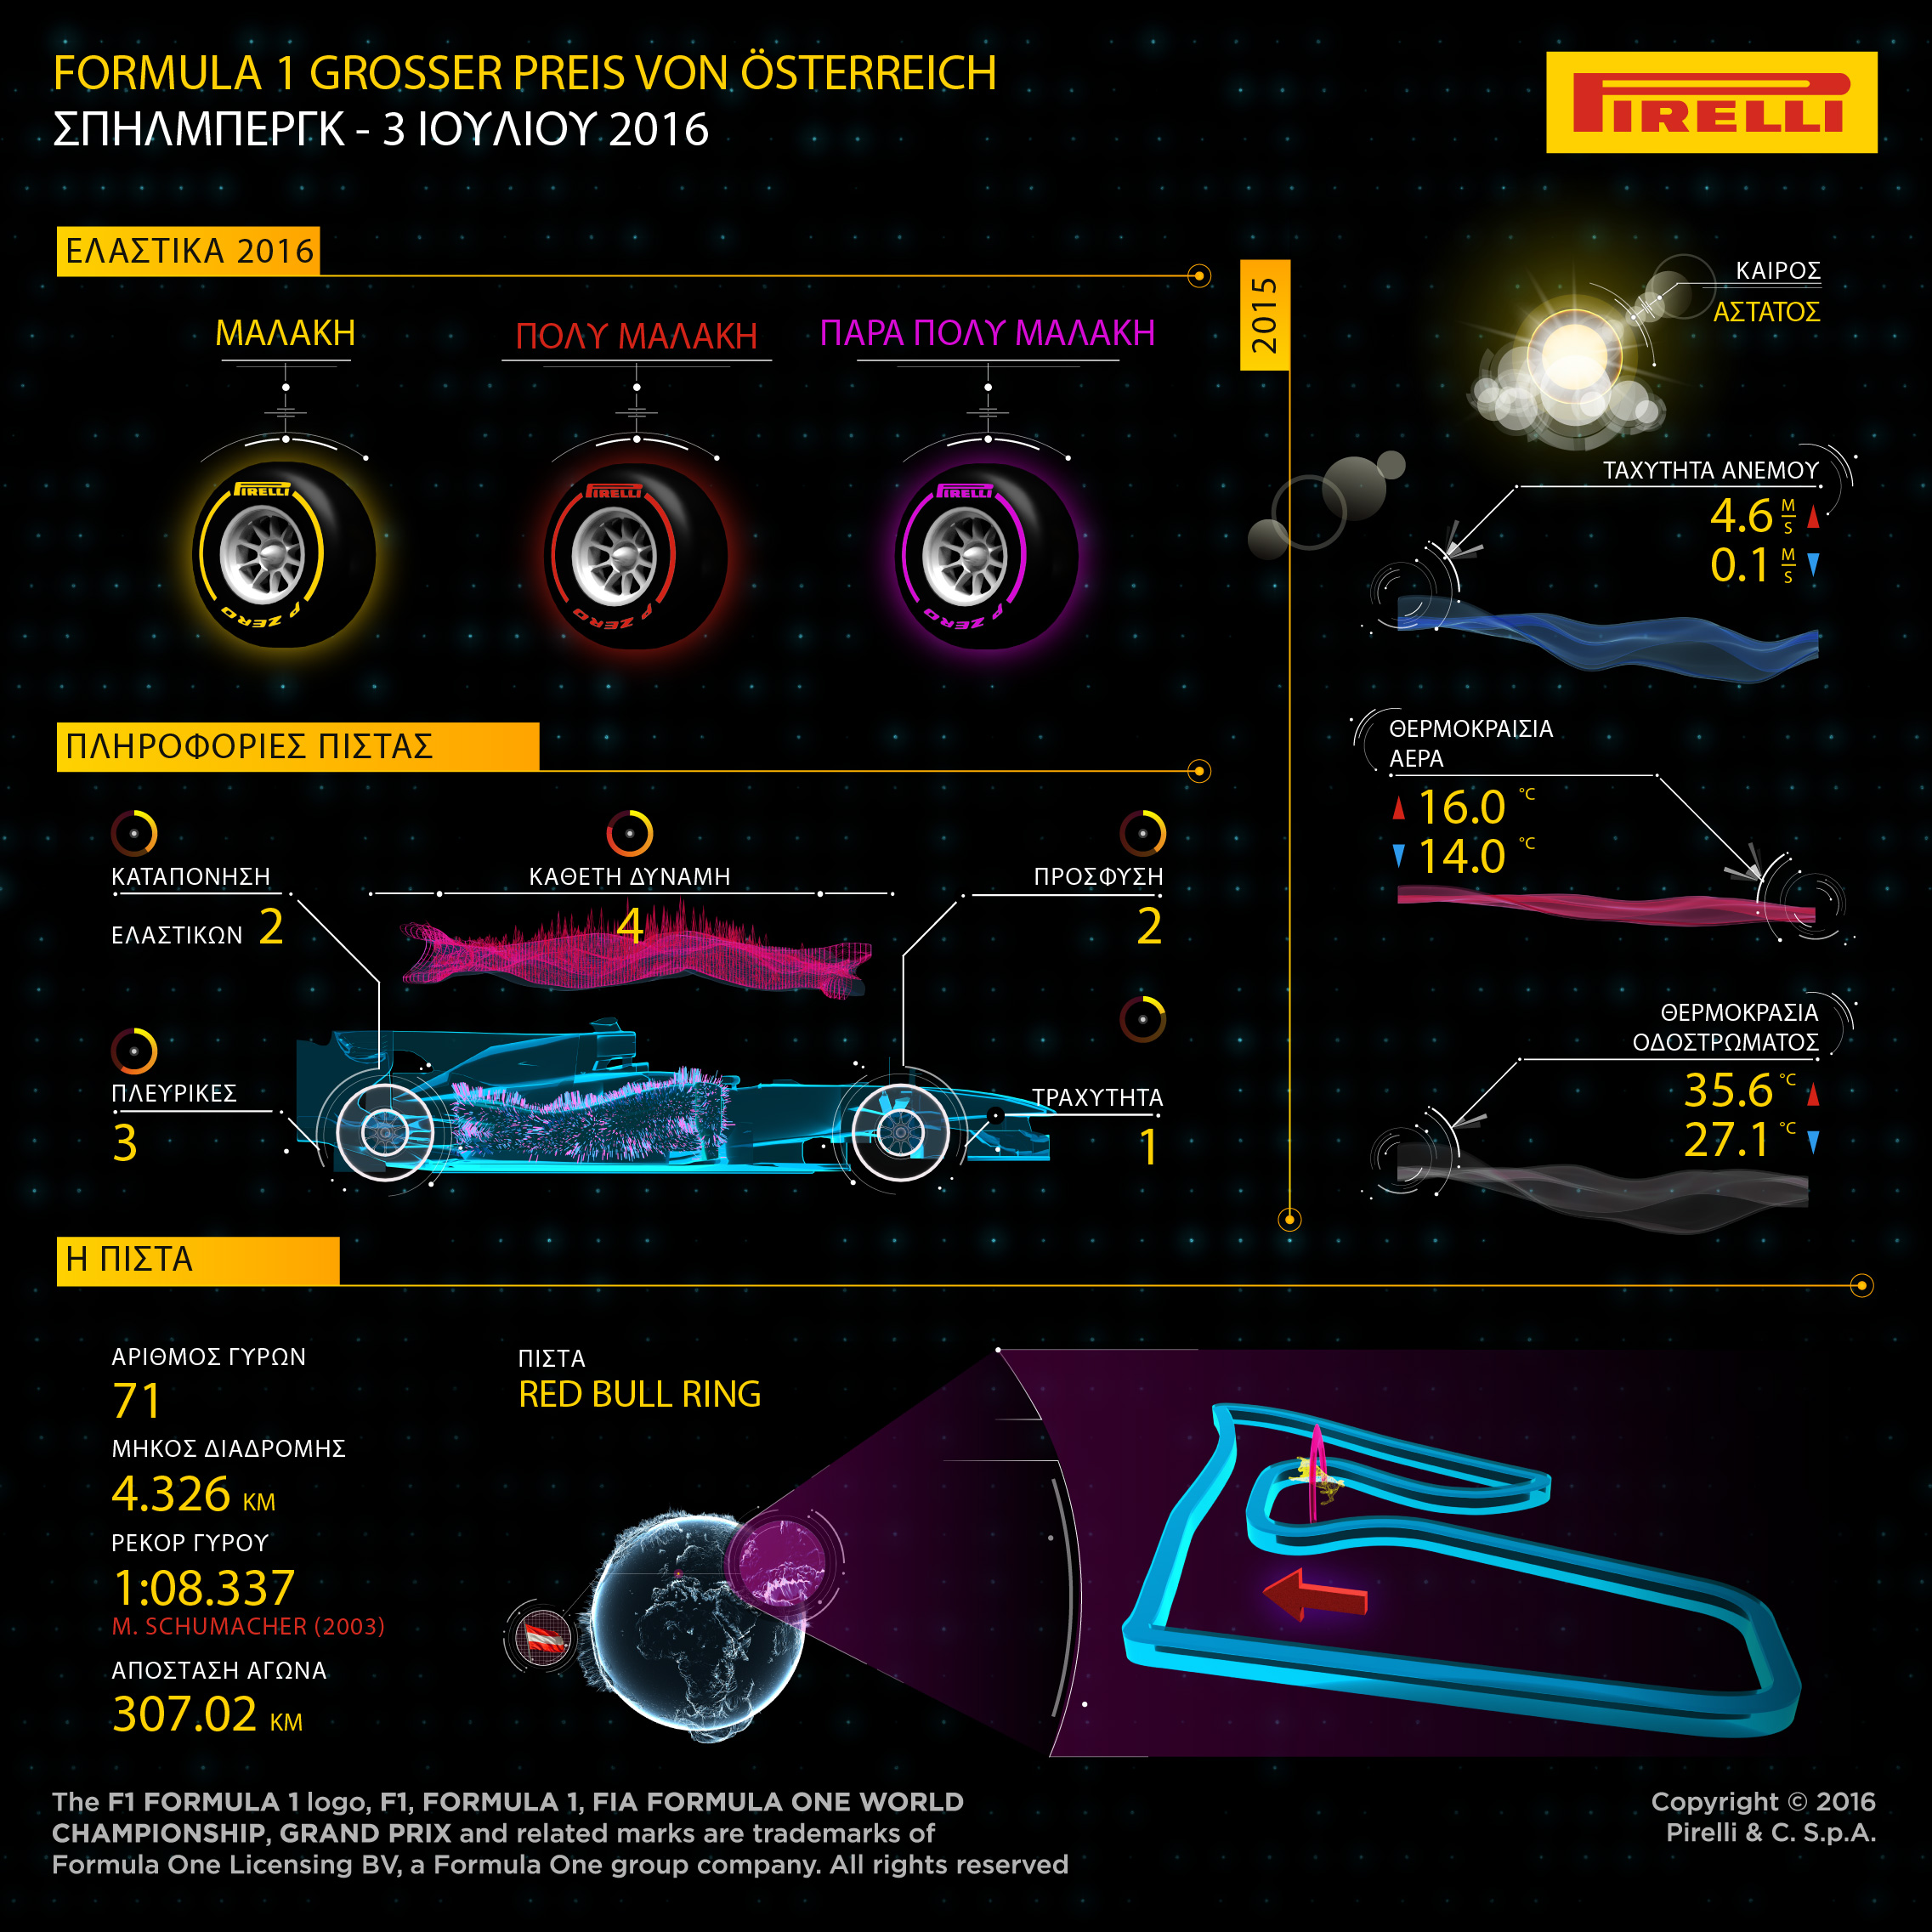 Pirelli GP Austria Preview (5)